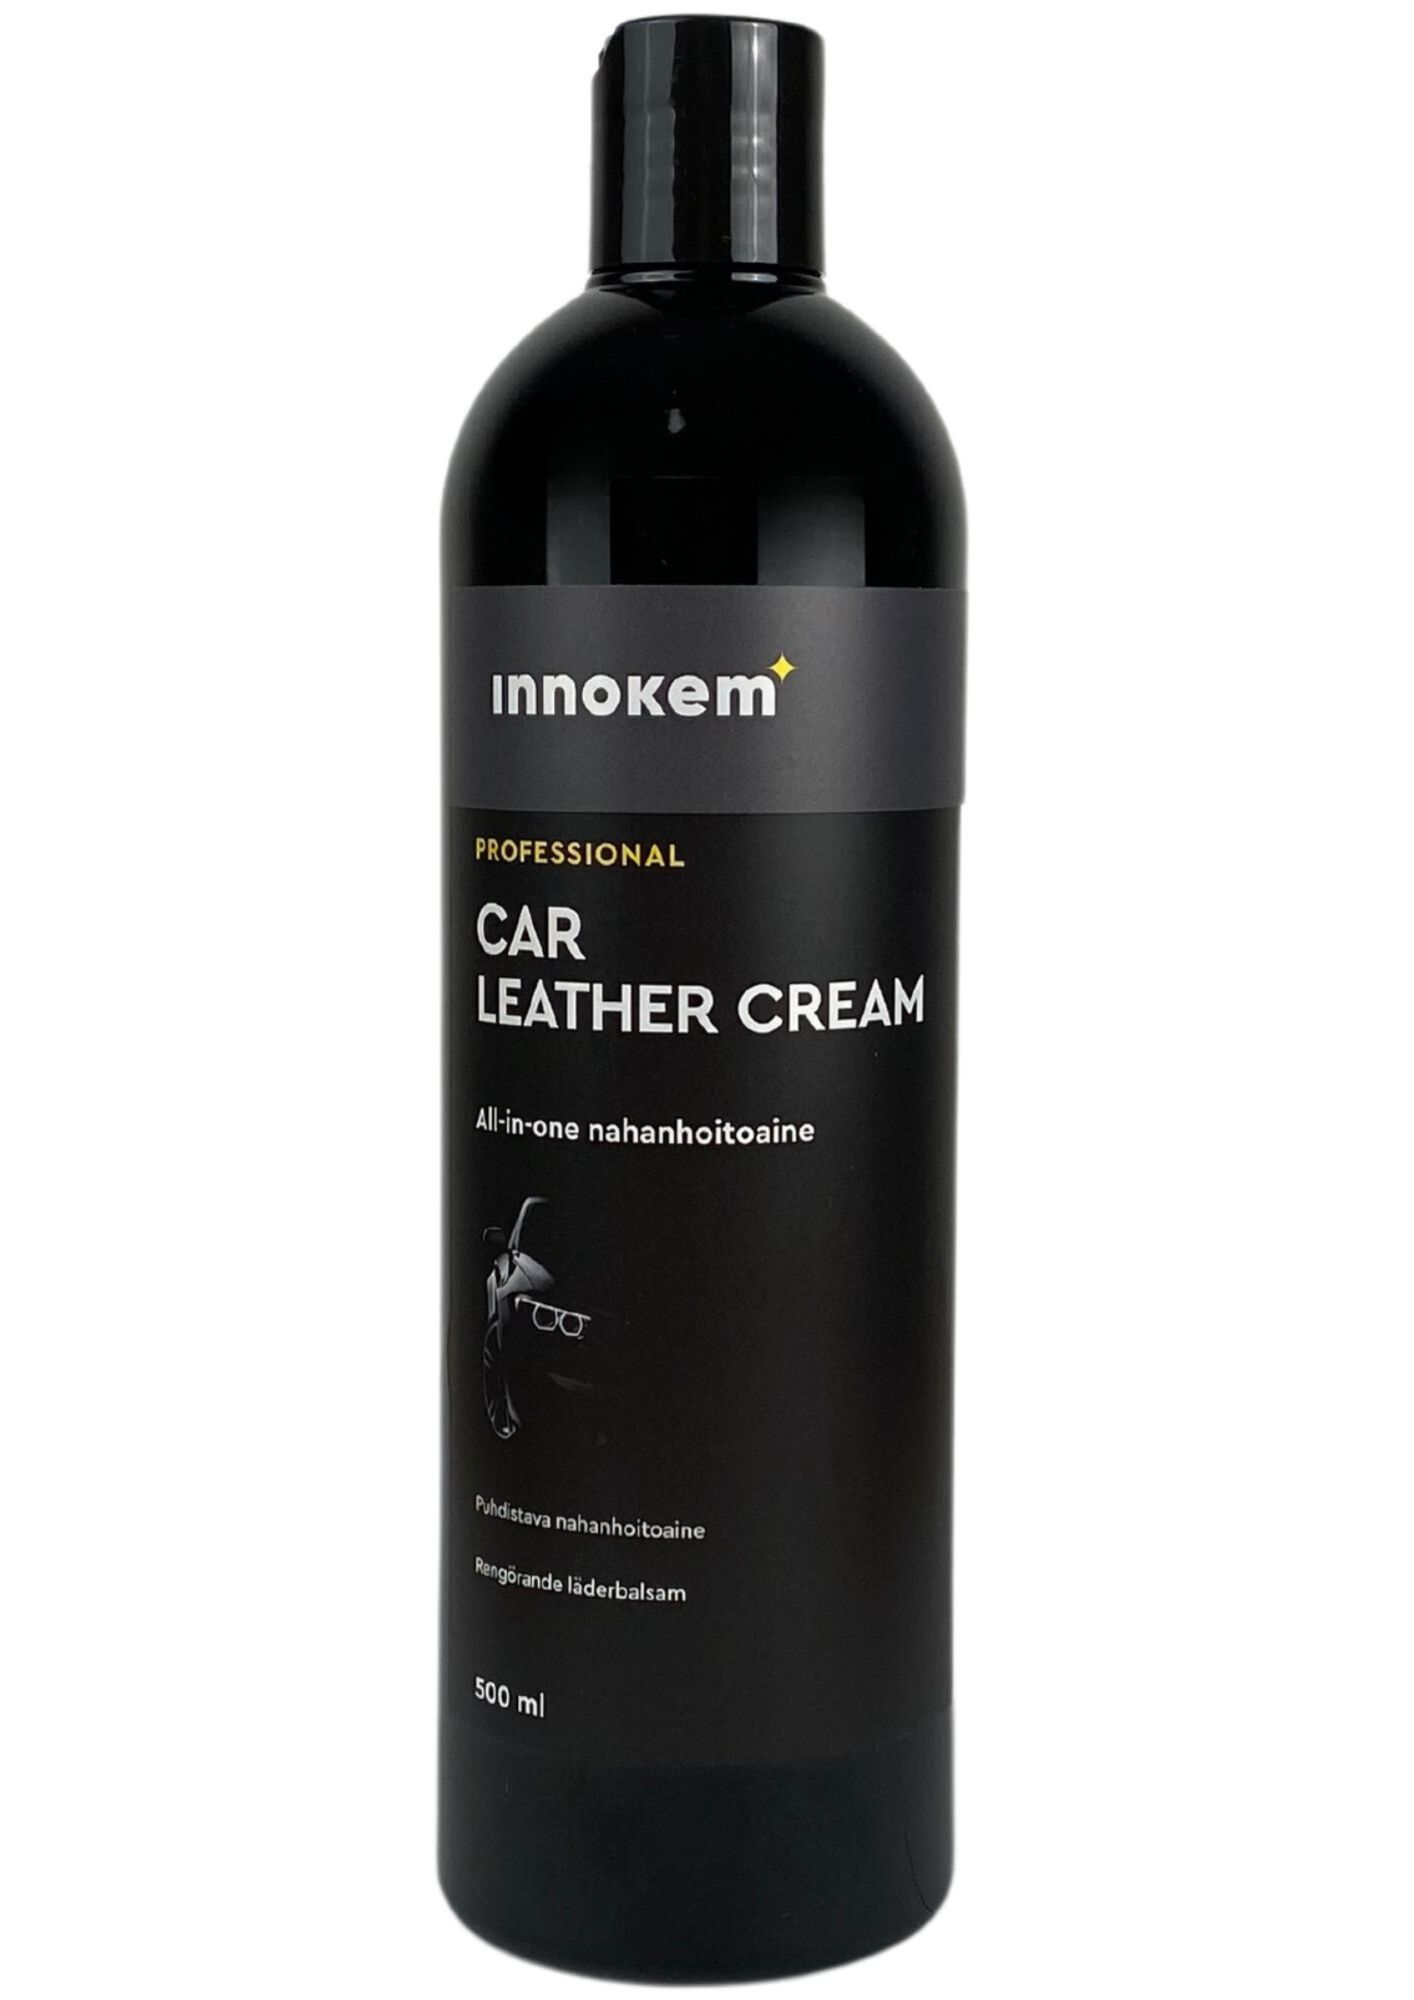 innokem leather cream nahanhoitoaine 500ml